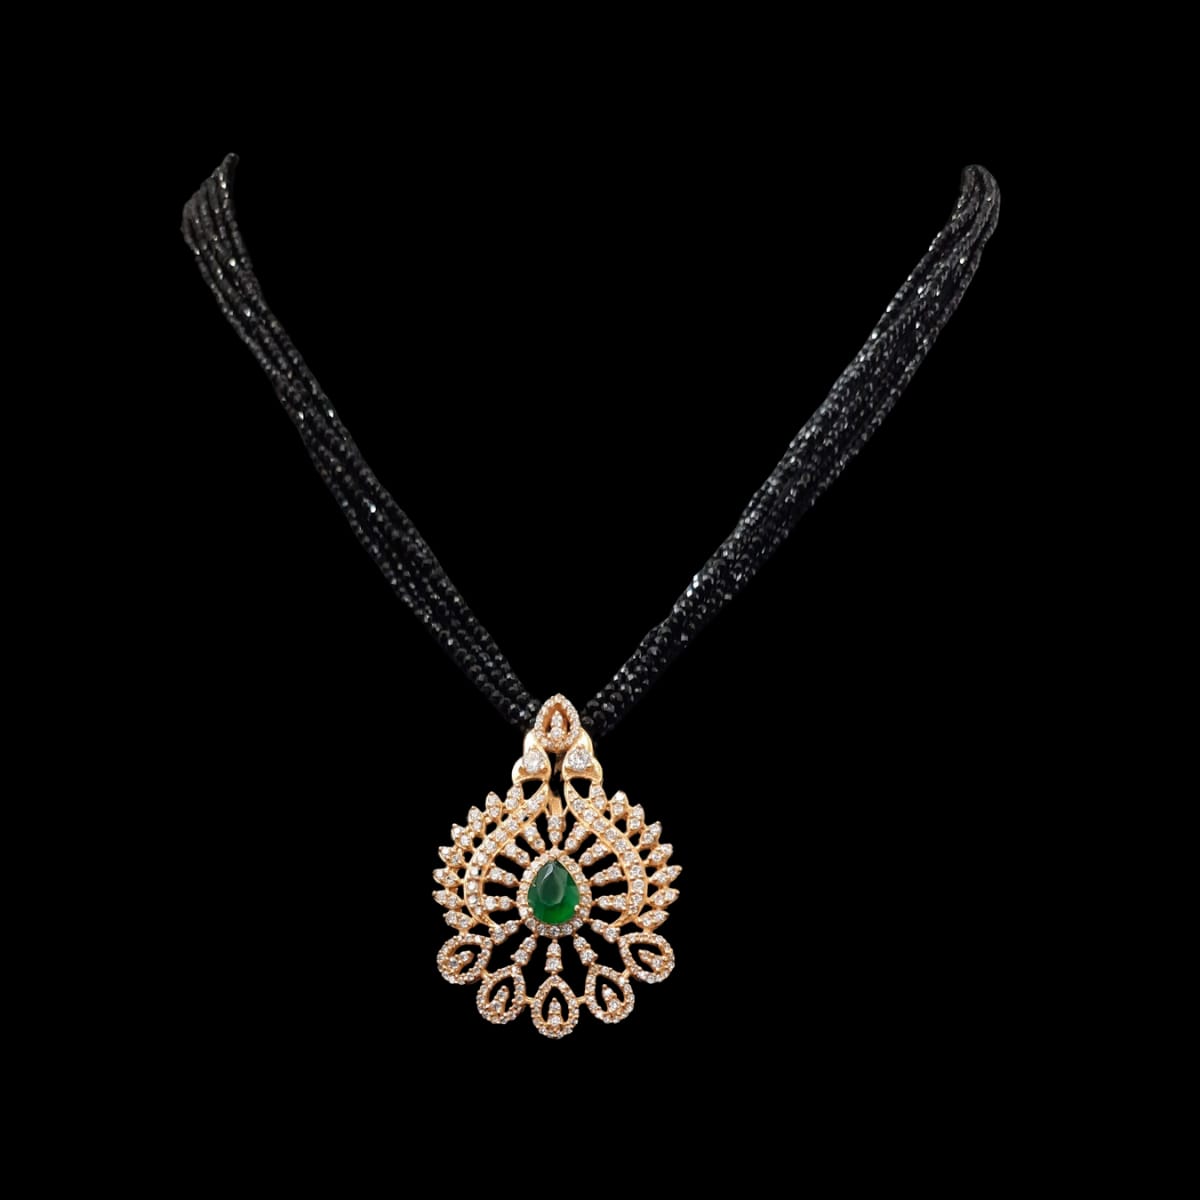 Elegant Black Beads Chain With Gemstone Pendant